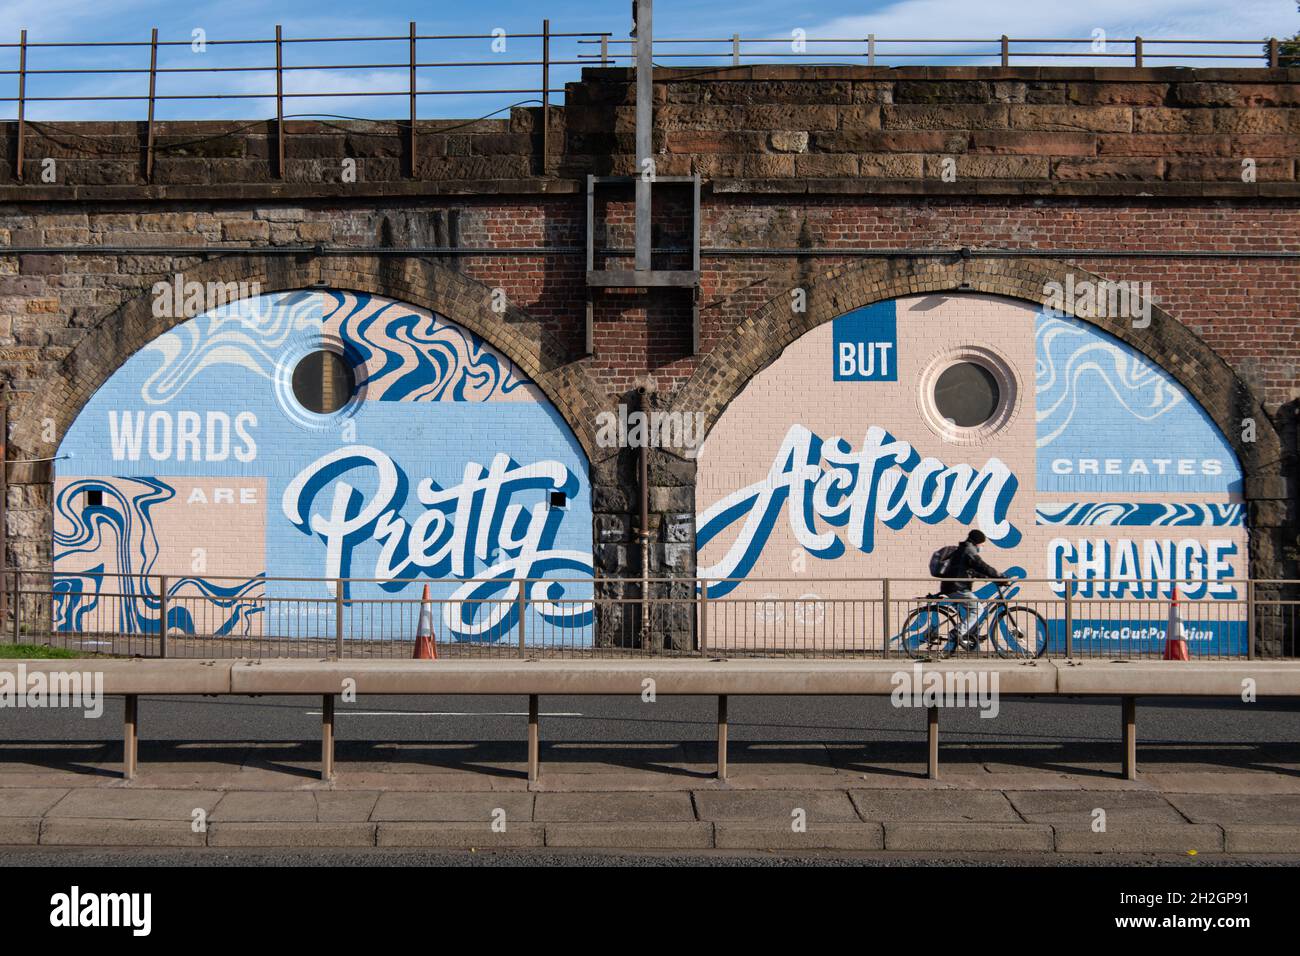 Zero Carbon Campaign #priceoutpollution mural 'Words are Pretty but Action creates Change' mural, Glasgow, Scotland, UK Stock Photo